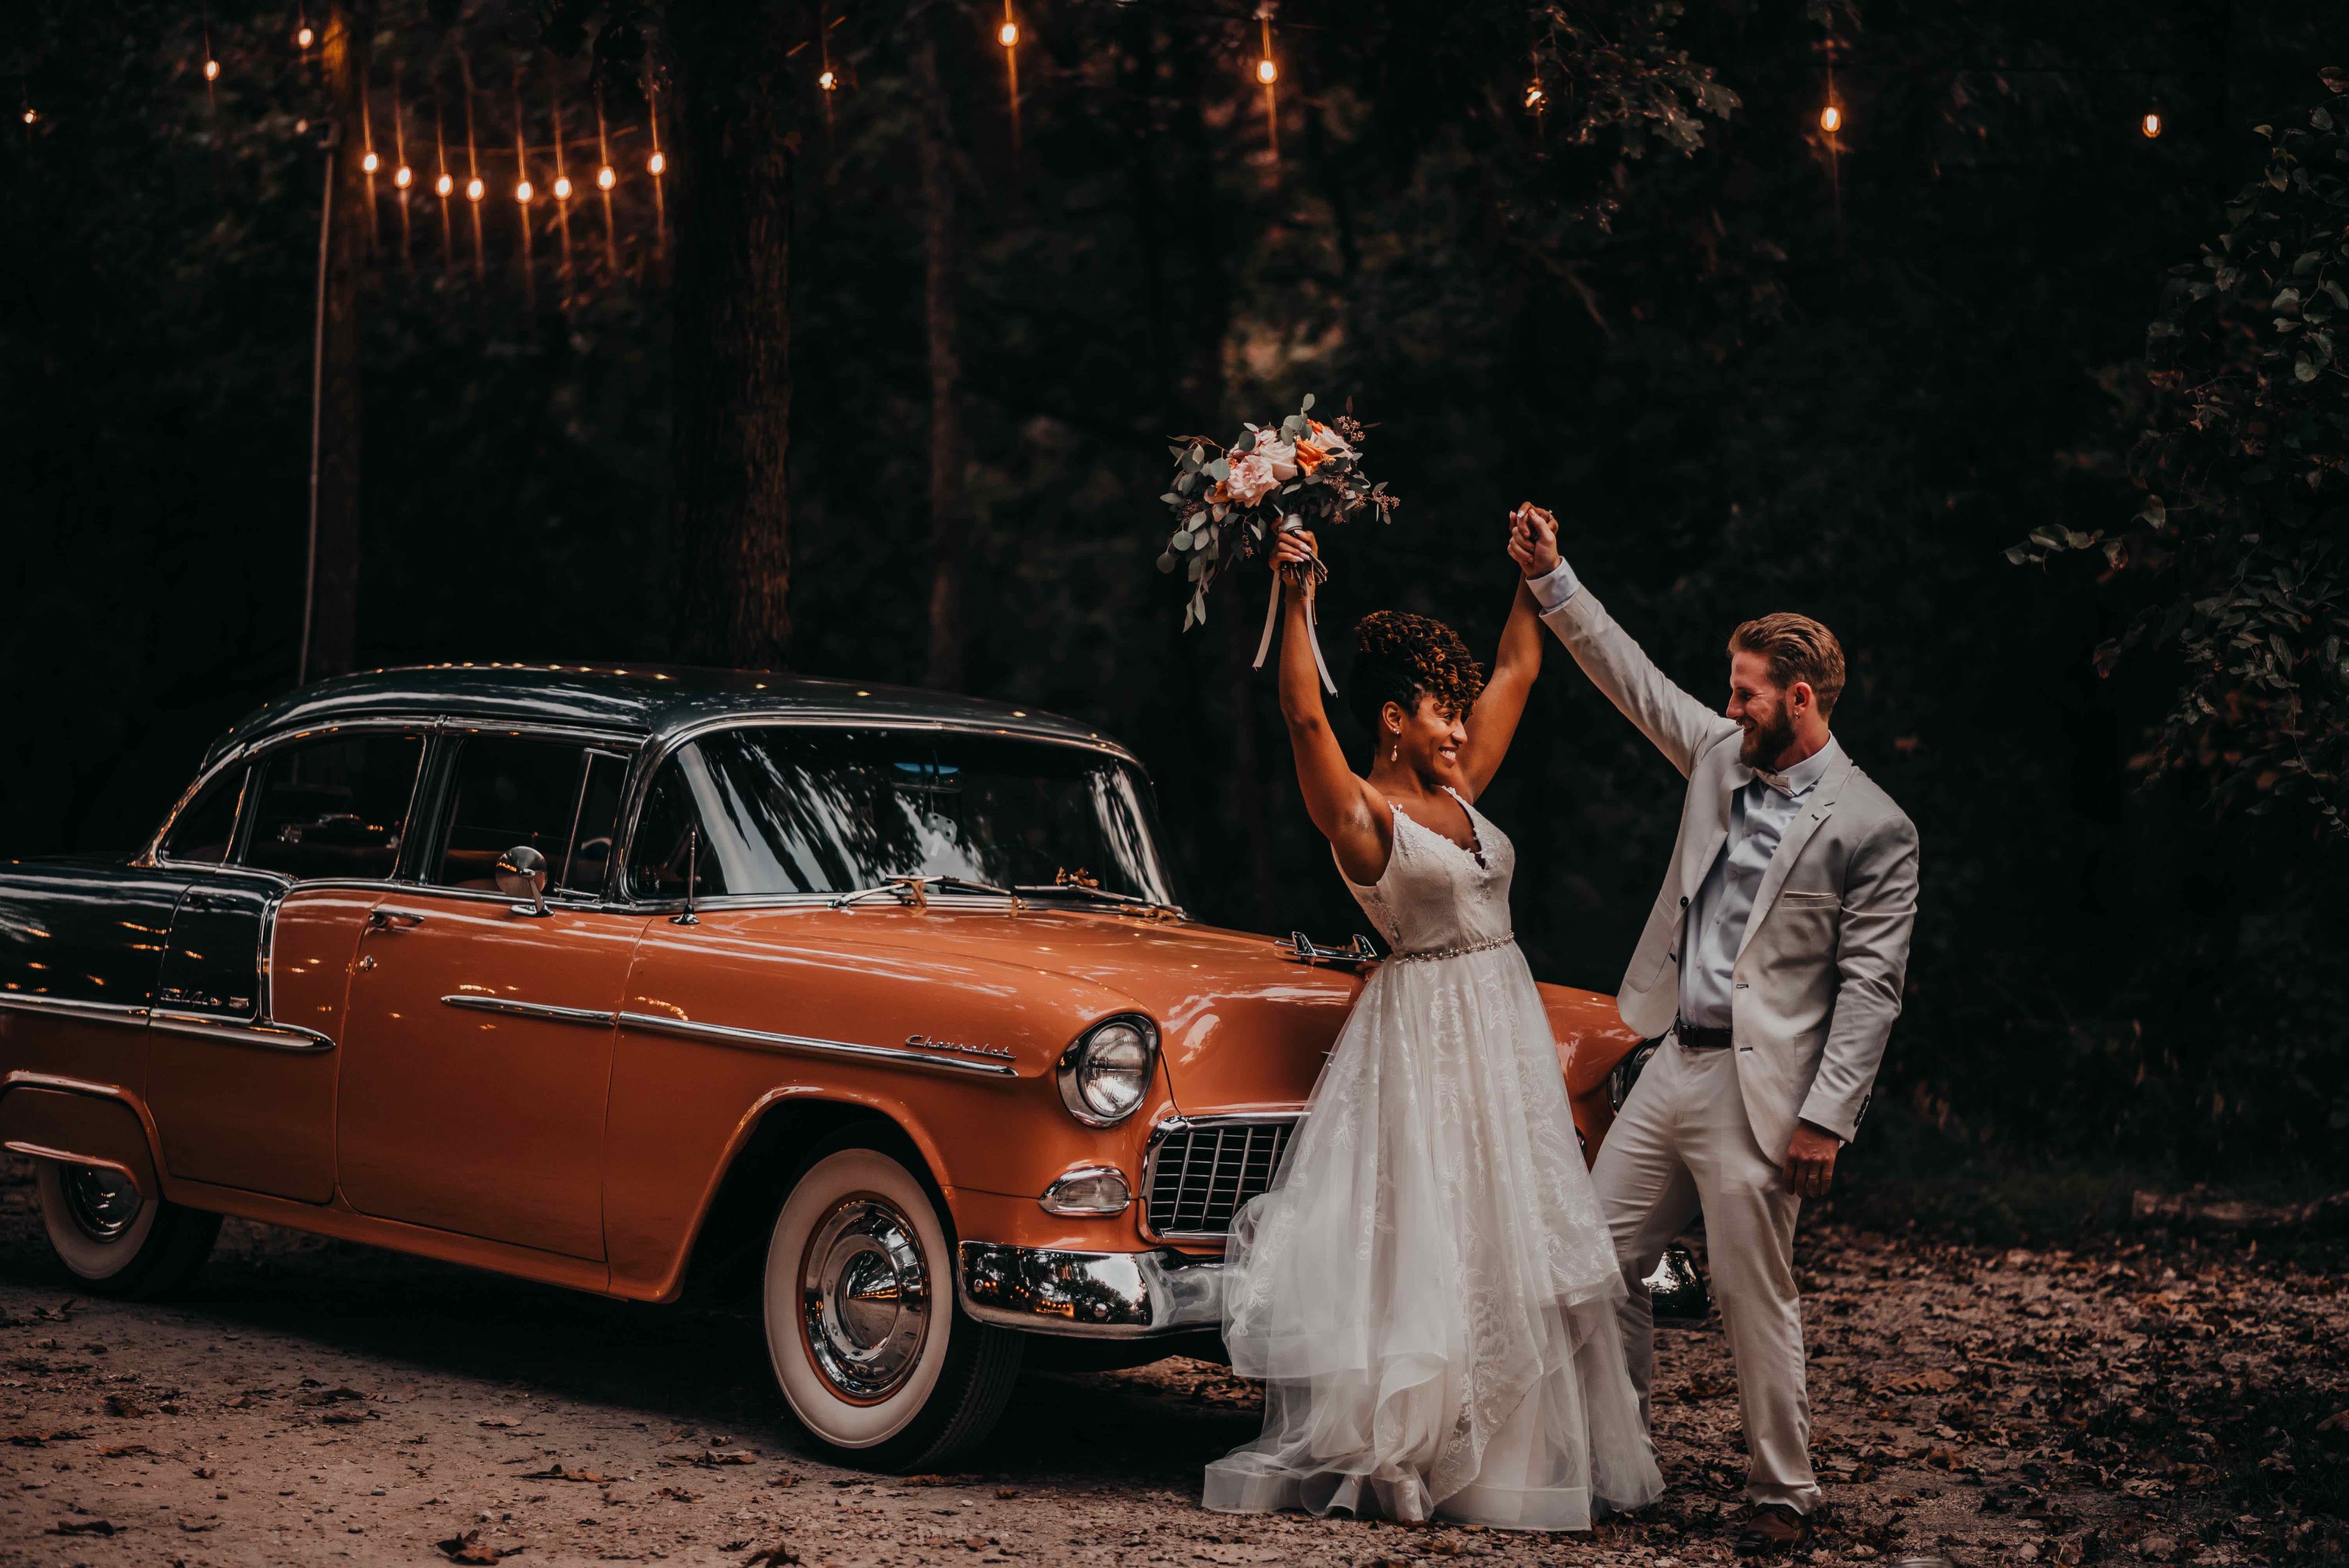 Bride and groom with vintage car